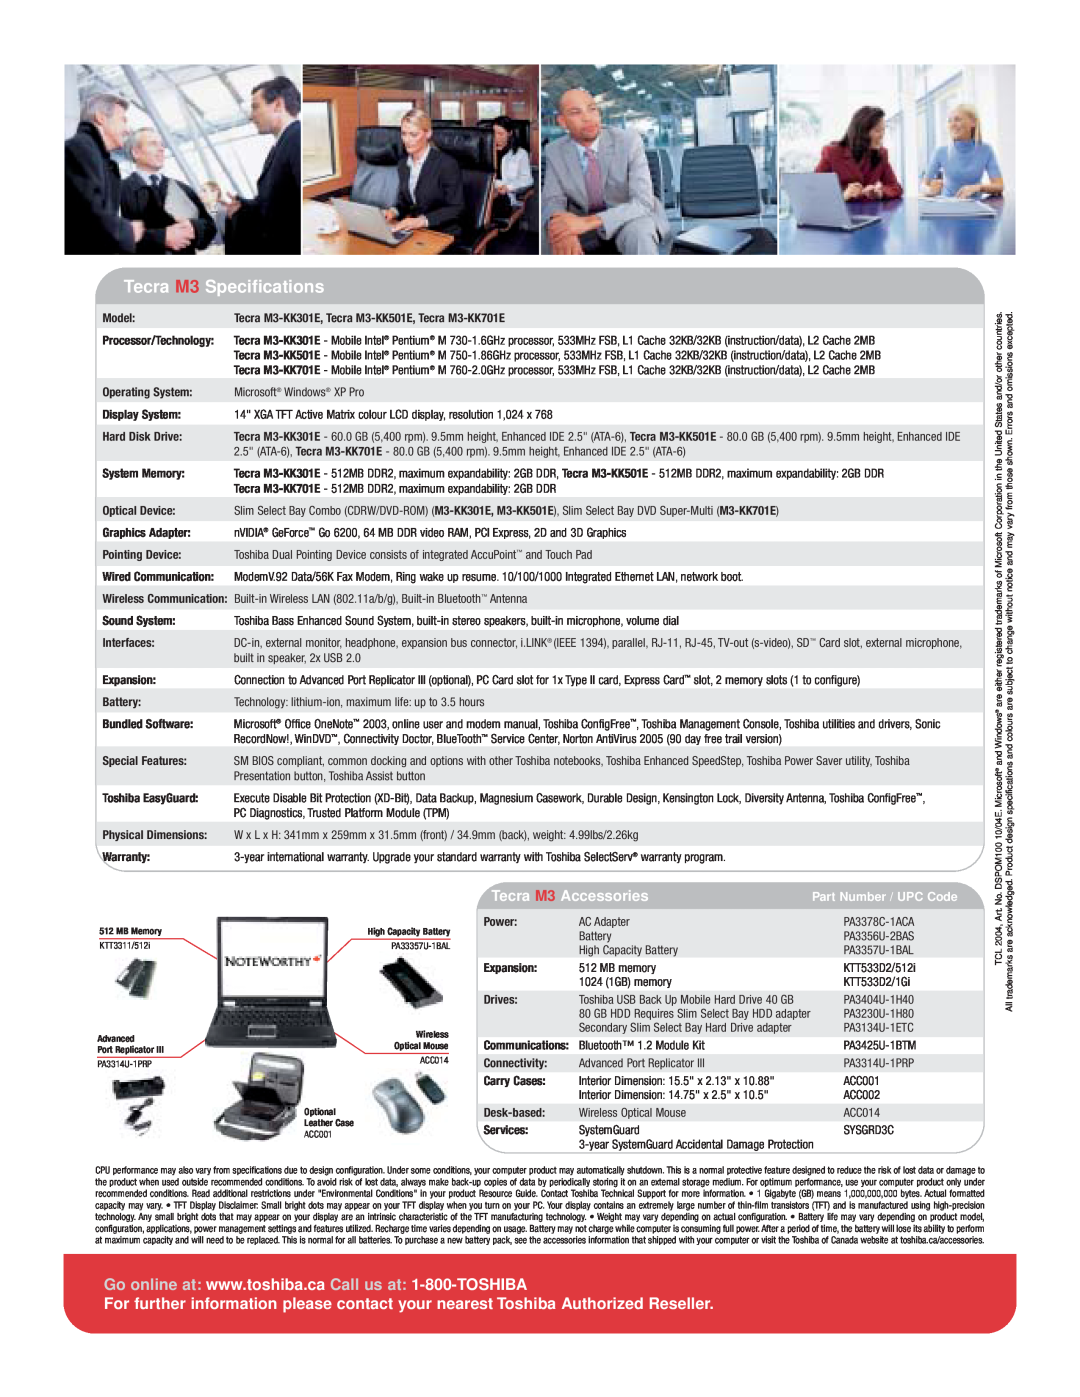 Toshiba manual Tecra M3 Specifications, Tecra M3 Accessories, Part Number / UPC Code 